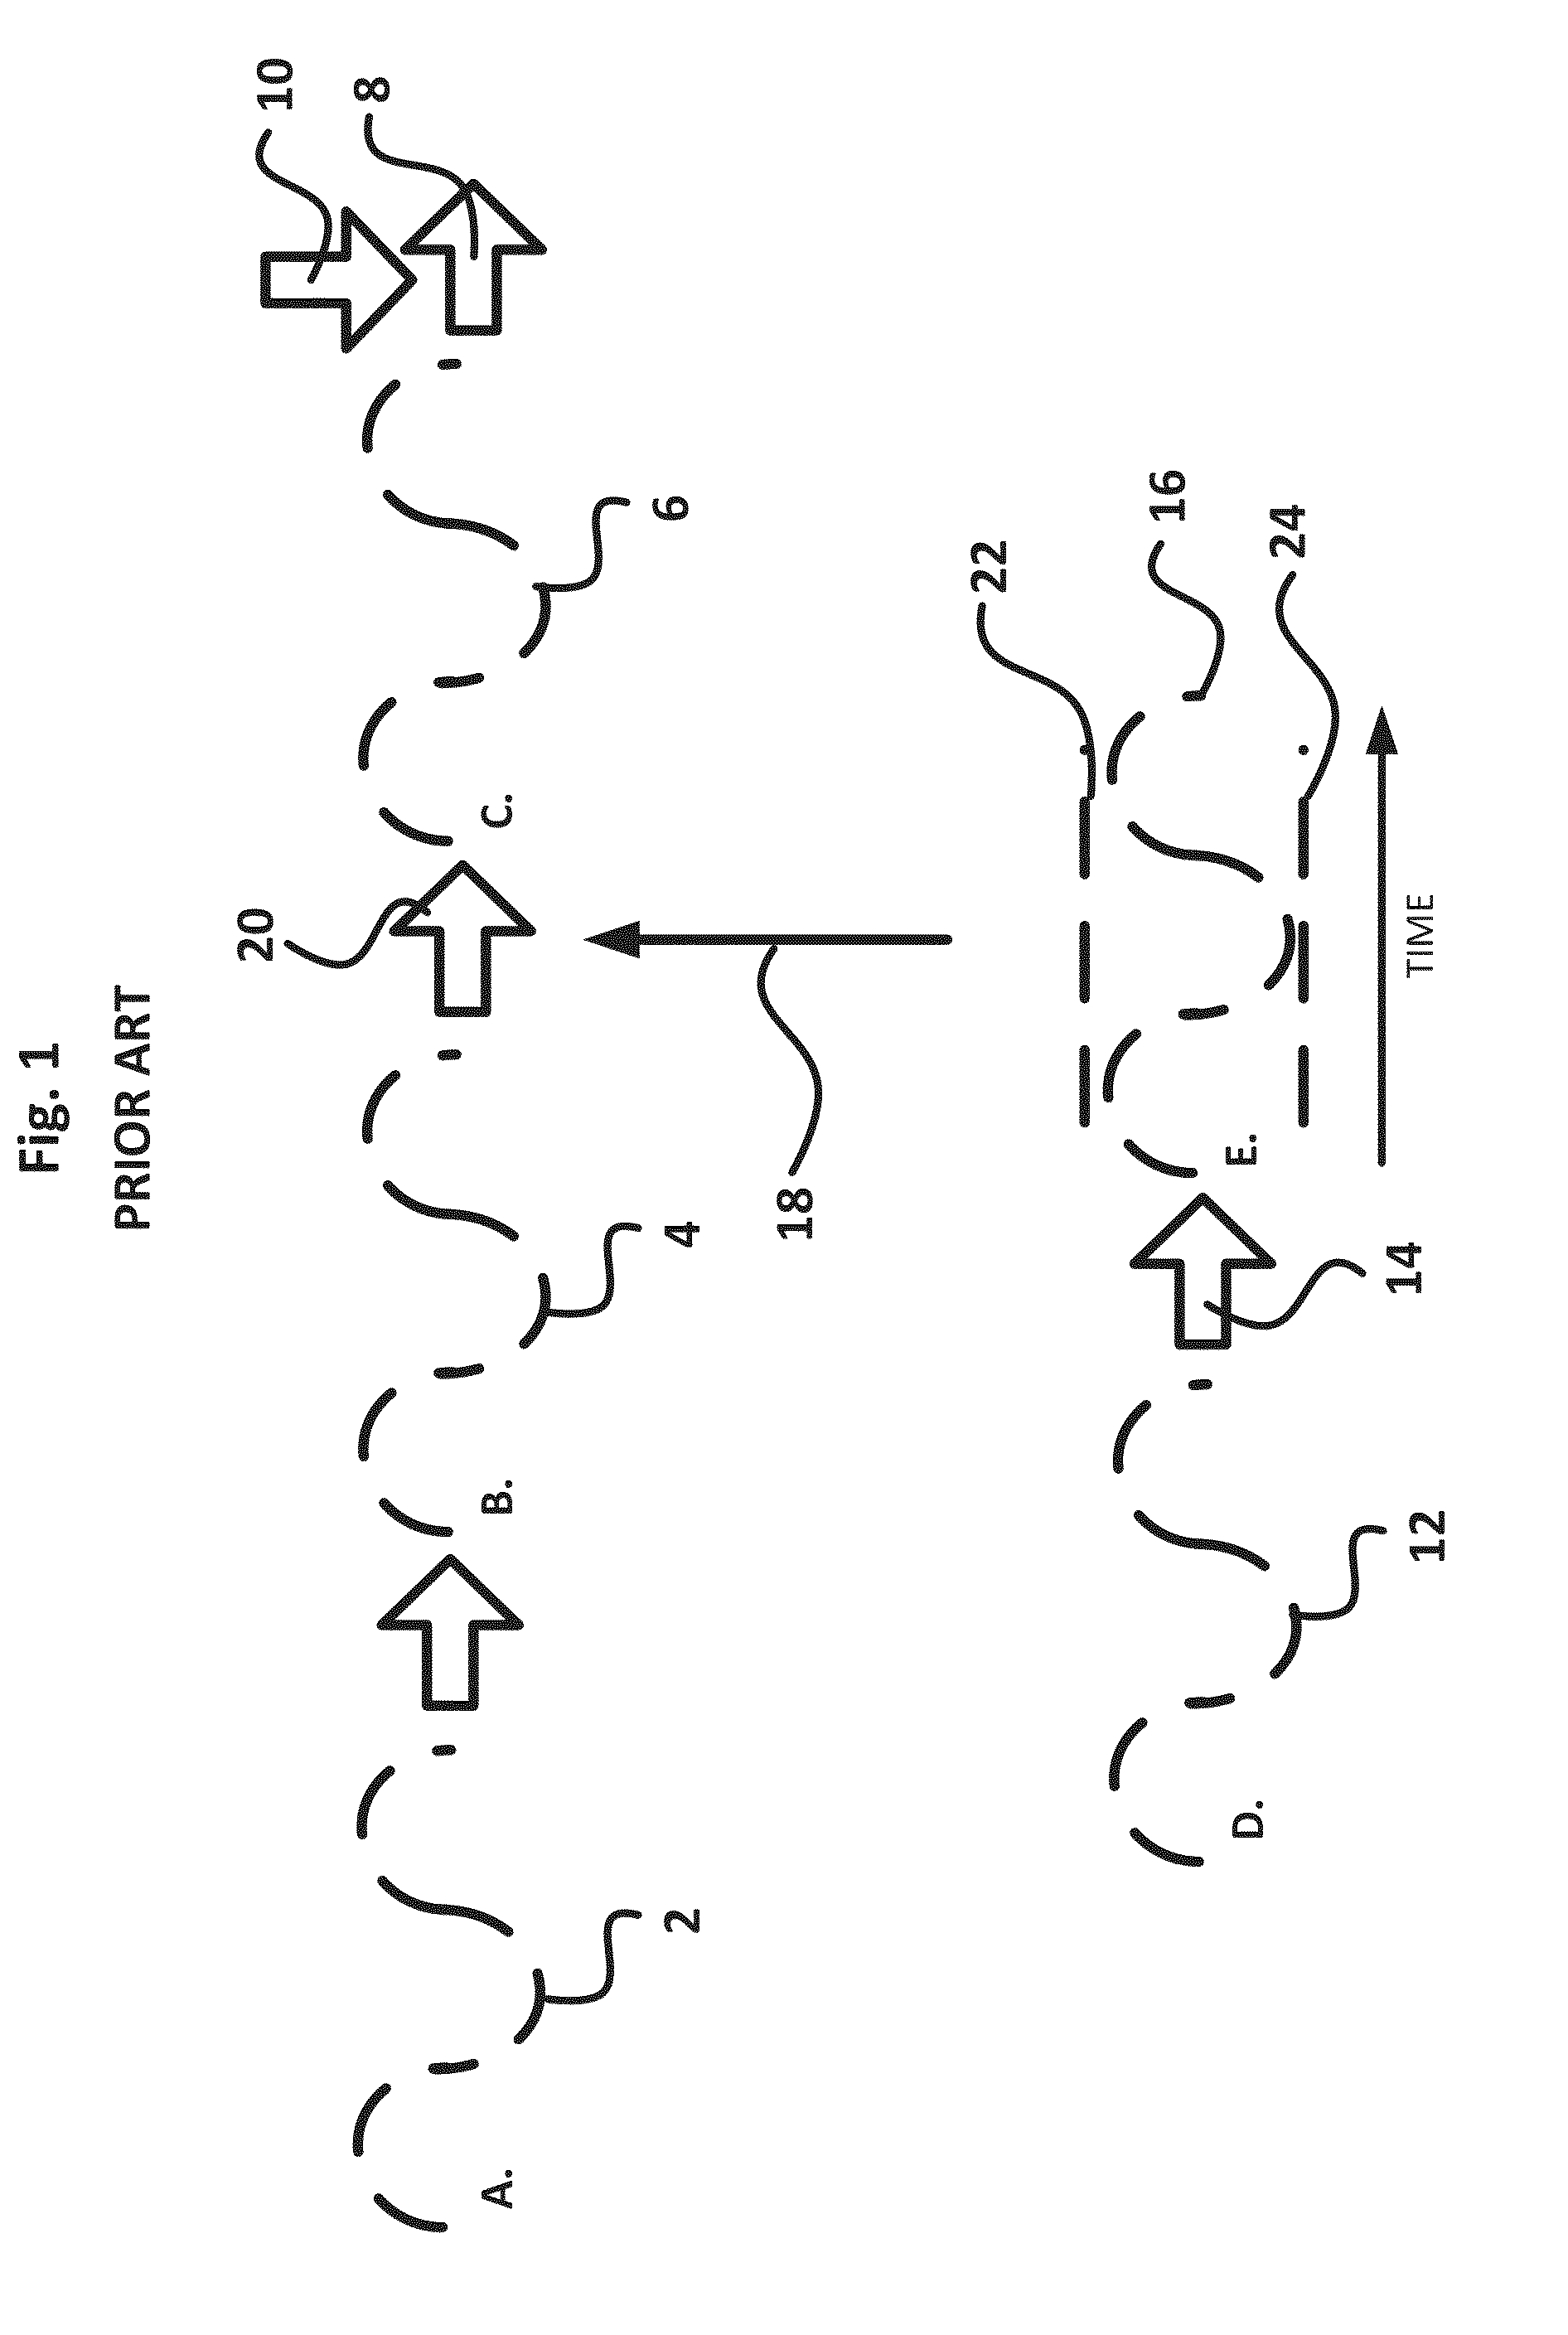 CO<sub>2 </sub>composite spray method and apparatus